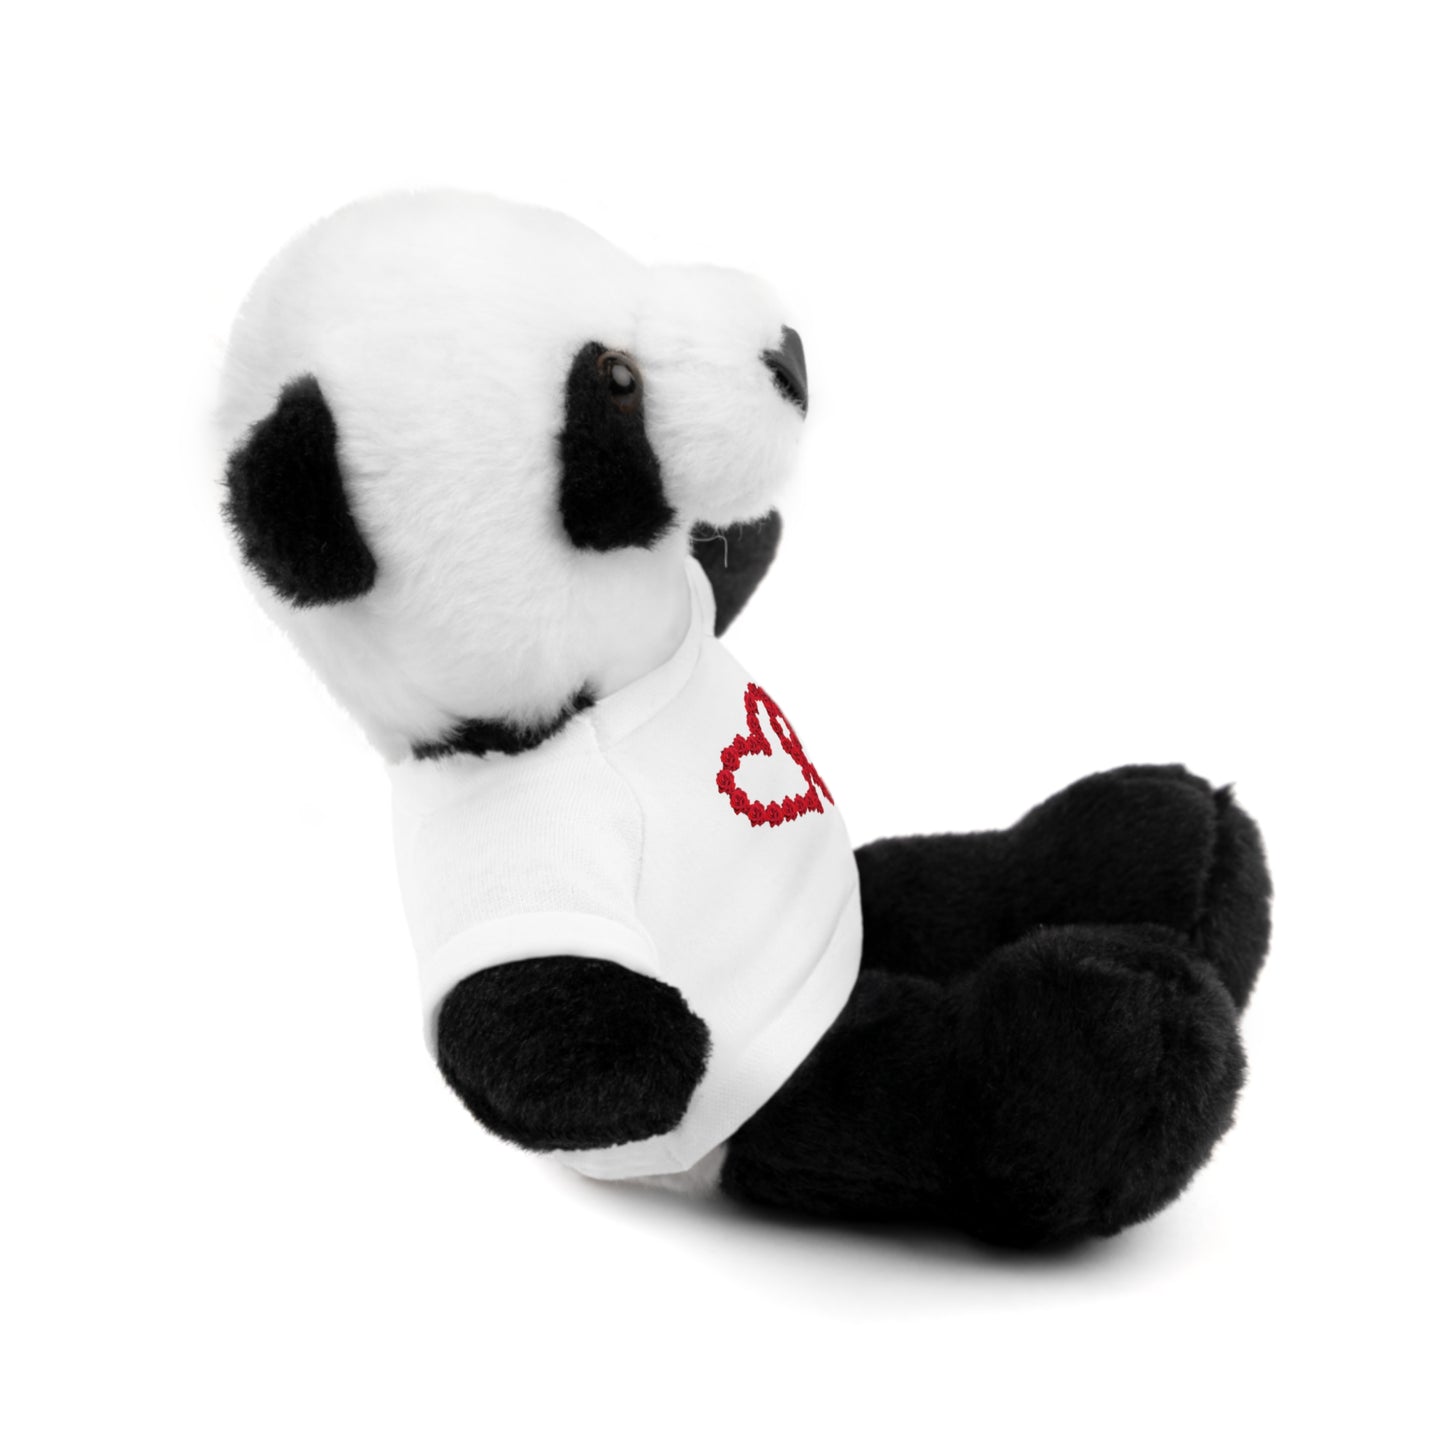 Stuffed Animals with Heart Tee, Pick a Panda, Lion, Bear, Bunny, Jaguar, or a Sheep